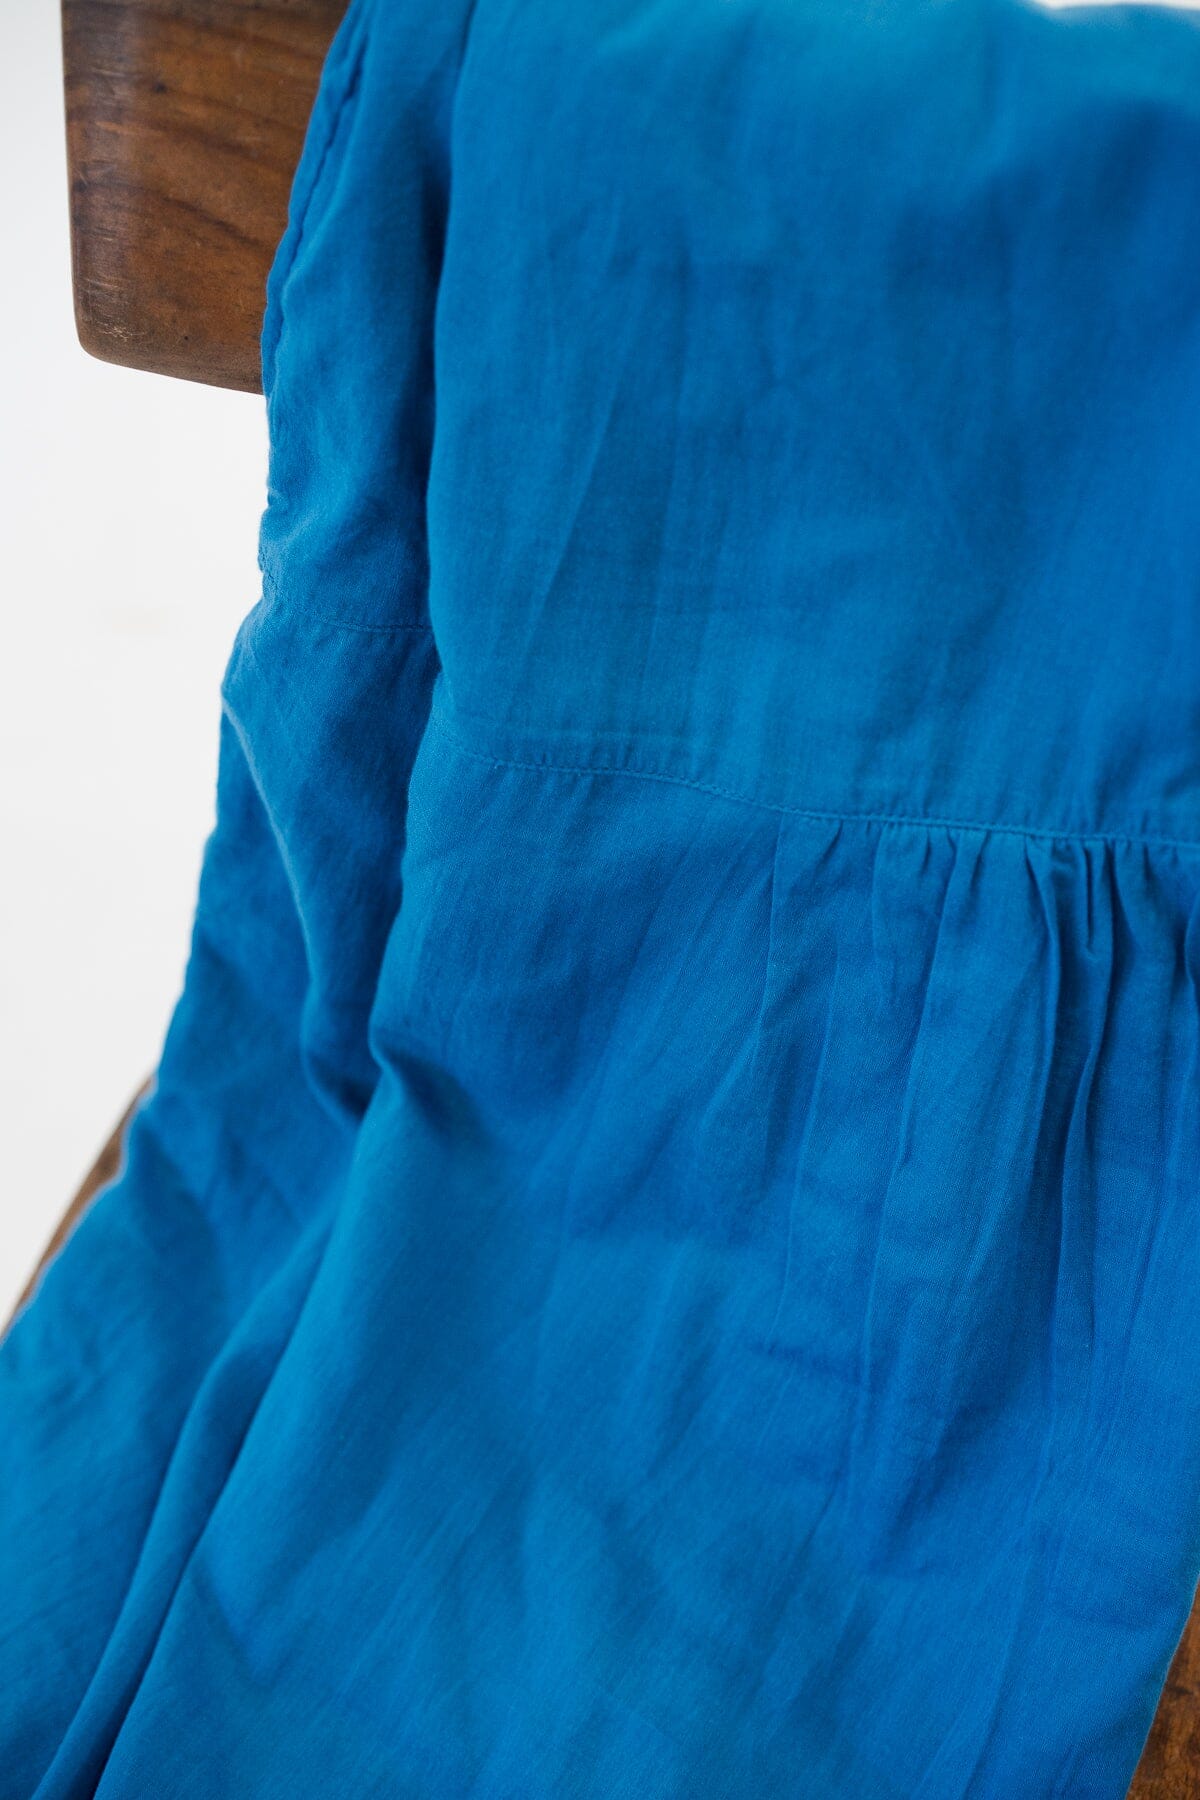 Linnea Mid Length Dress - Lapis Blue